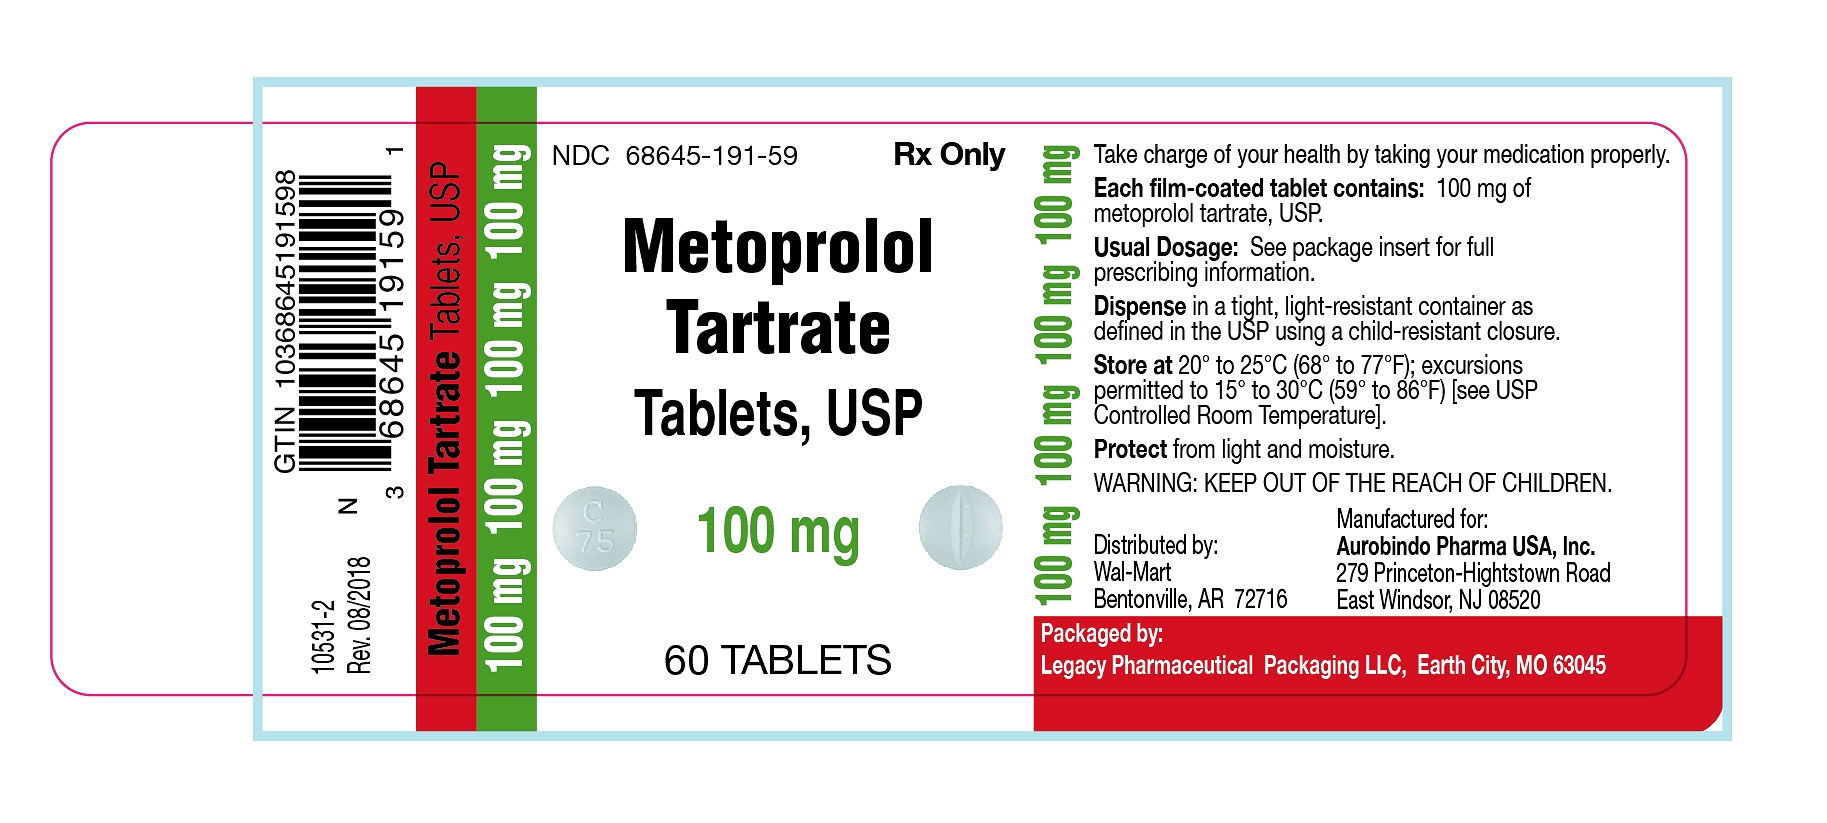 Metoprolol Tartrate Tablets, USP 100mg